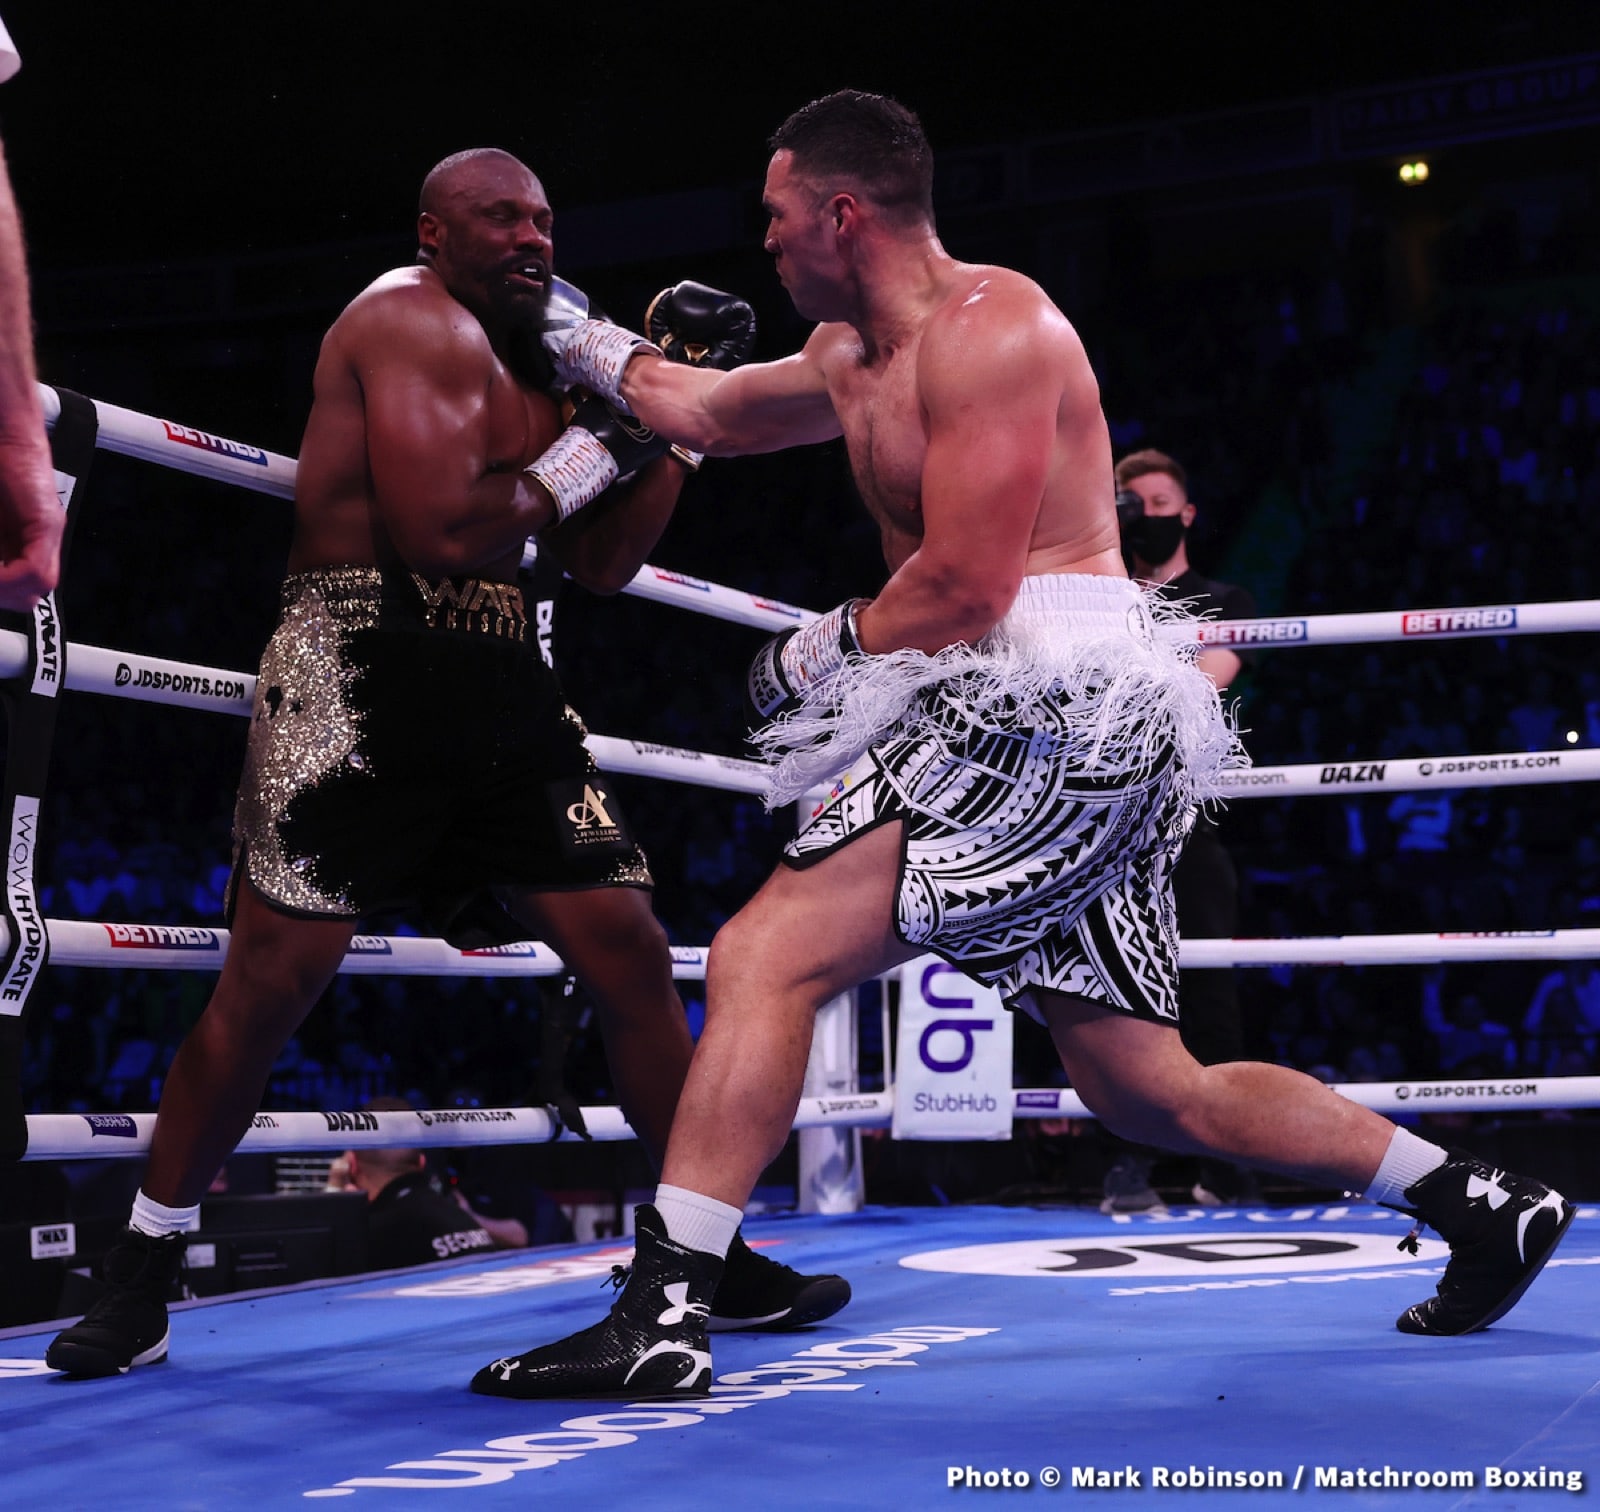 Kevin Lele Sadjo boxing image / photo